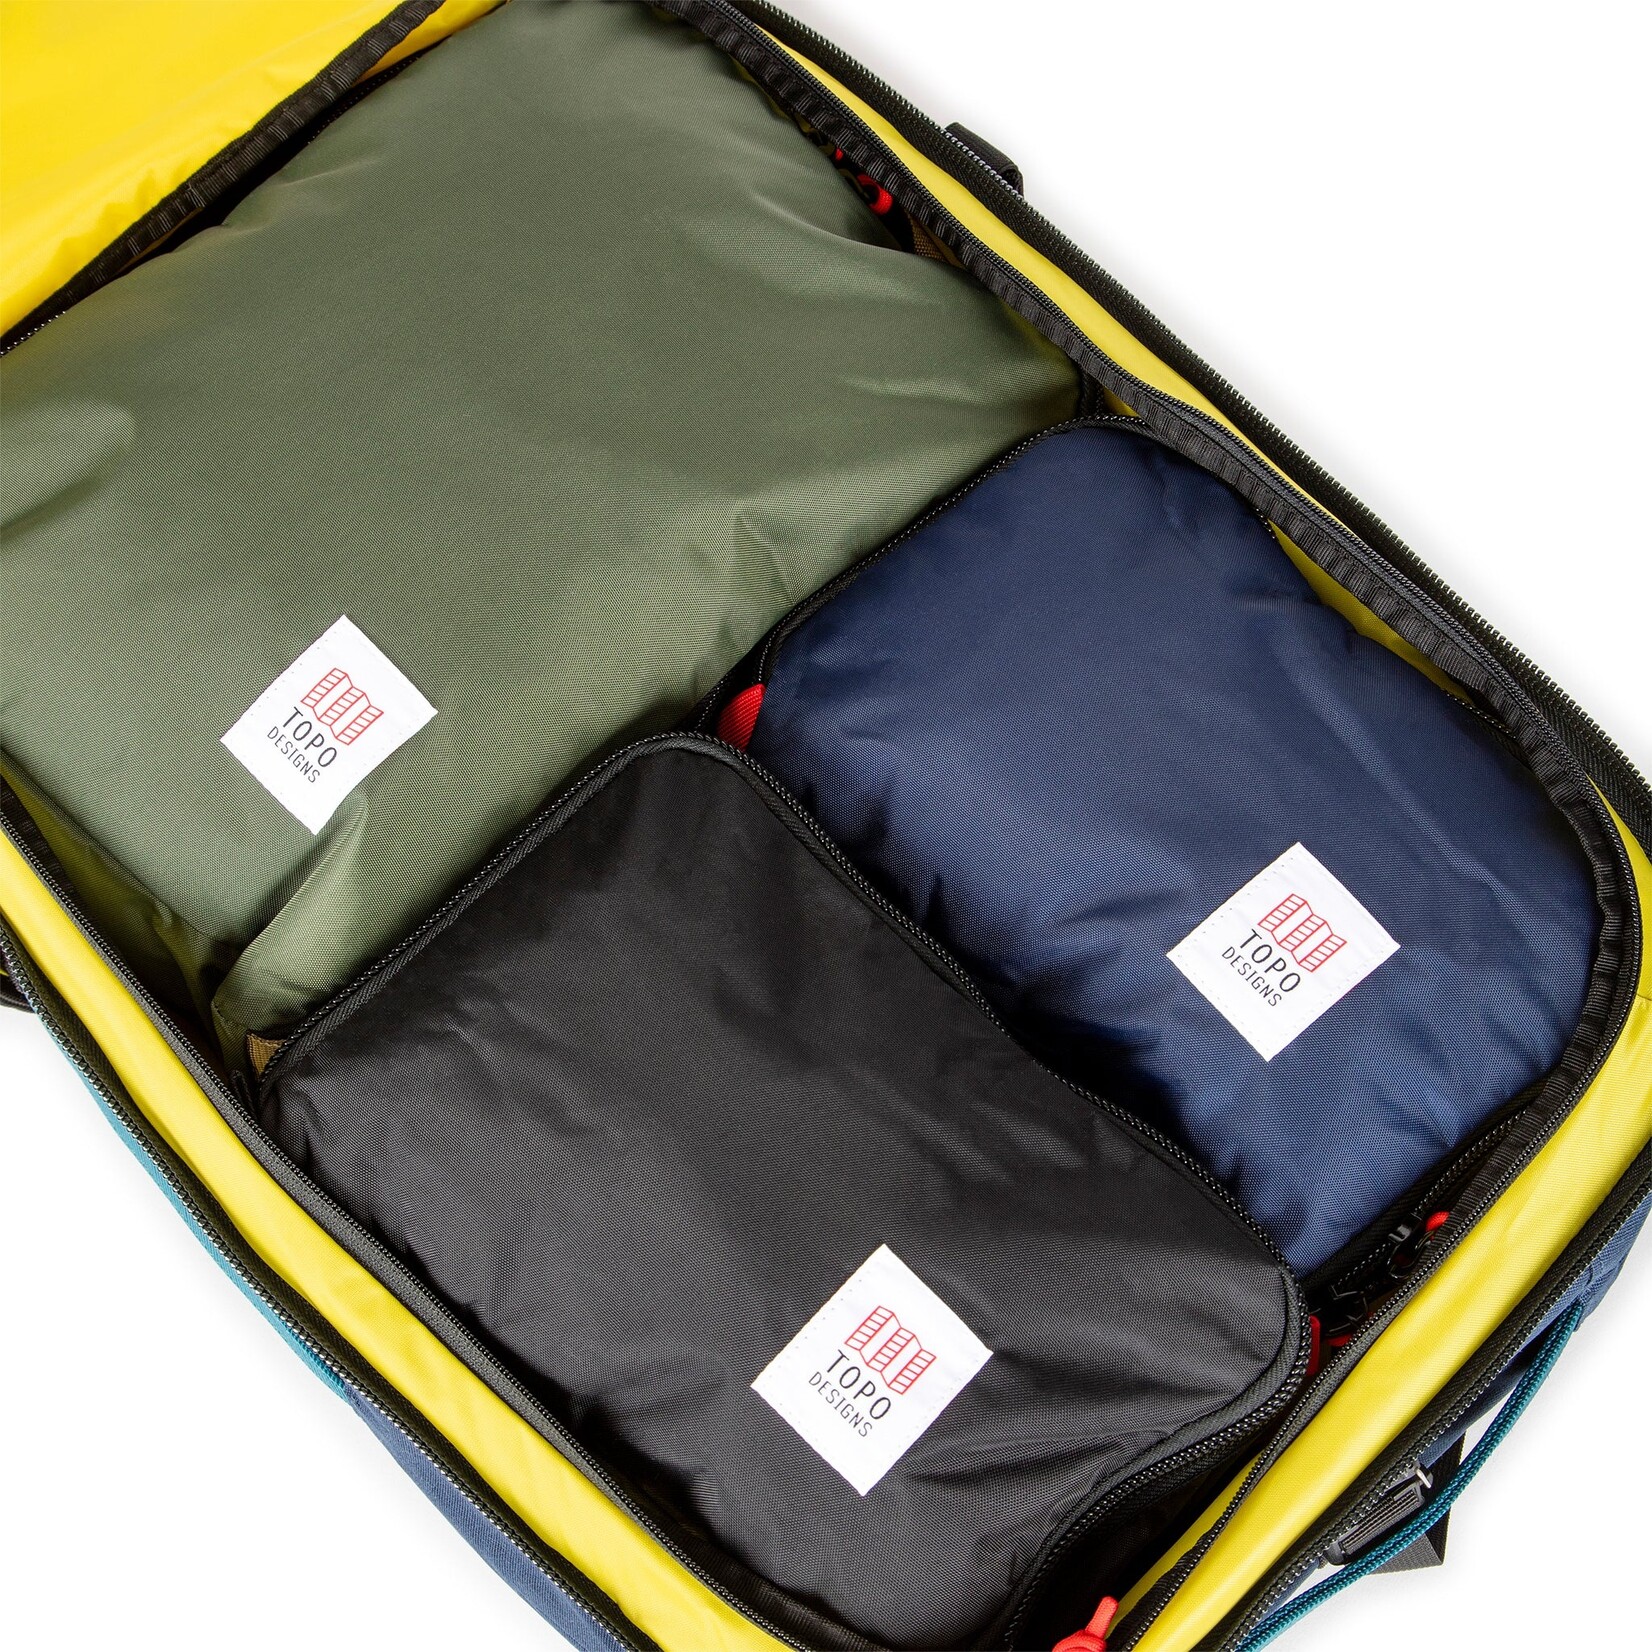 Topo Designs Topo Designs Global Travel Bag, 30L